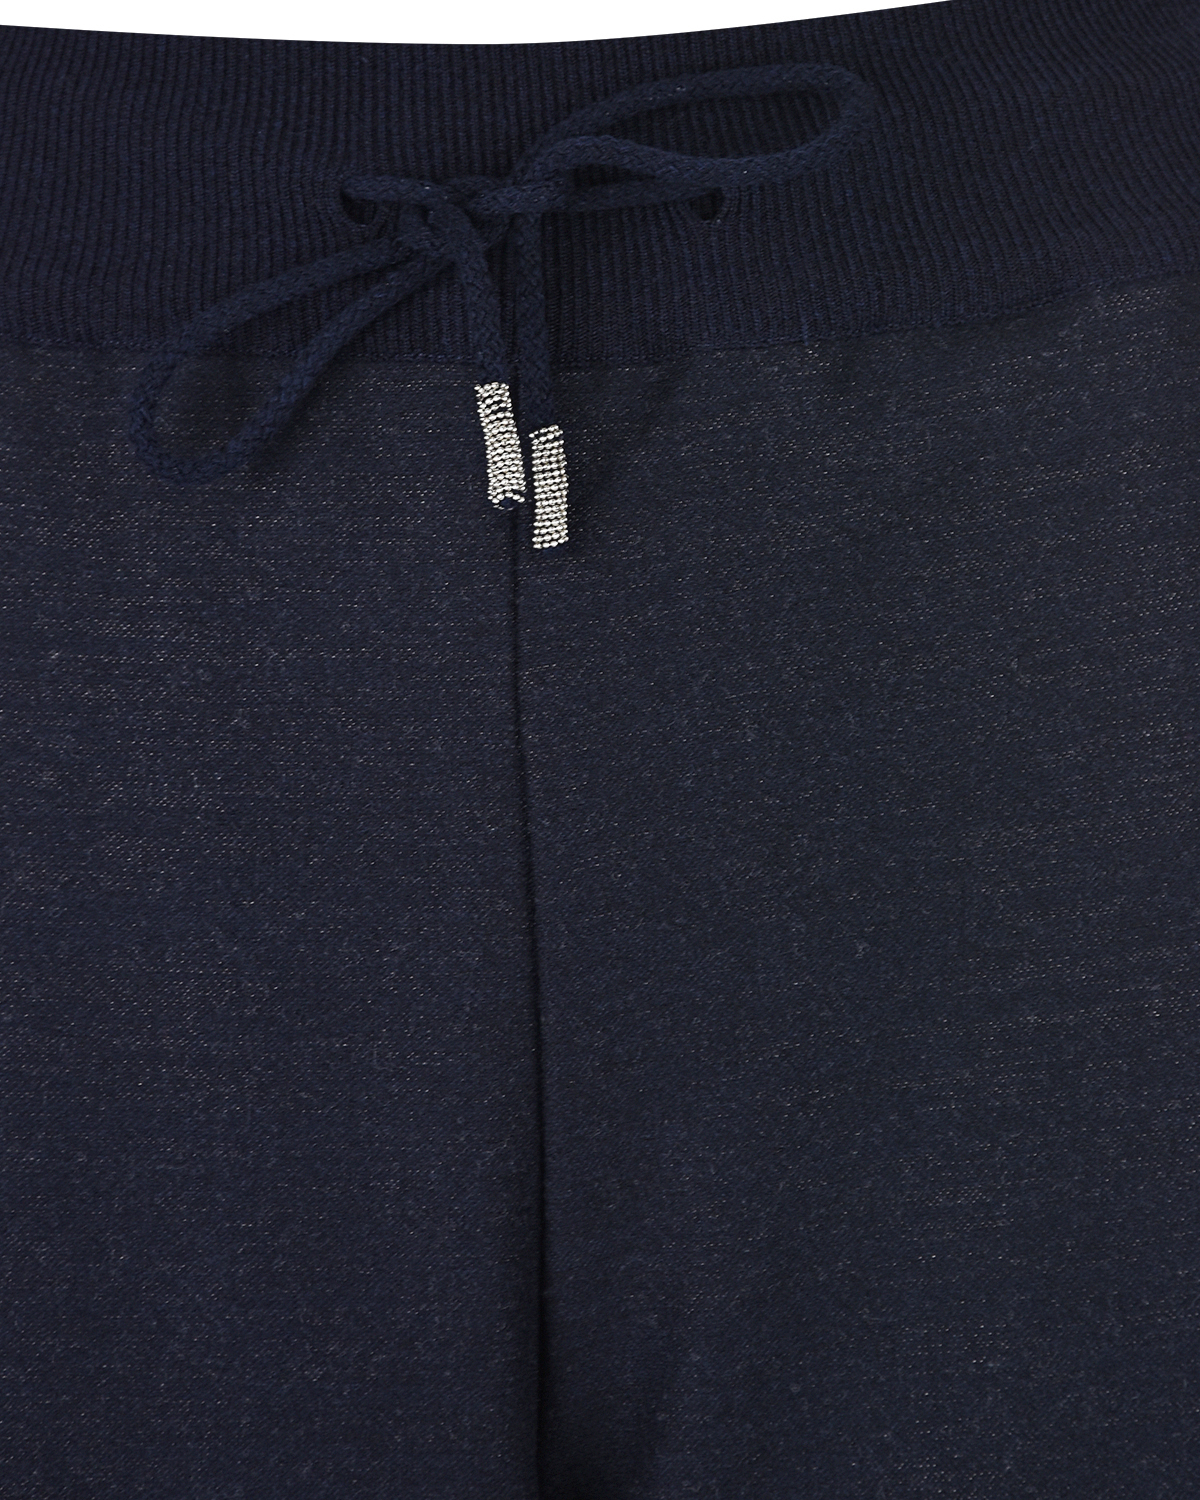 Синие брюки с люрексом Panicale, размер 46, цвет синий - фото 6